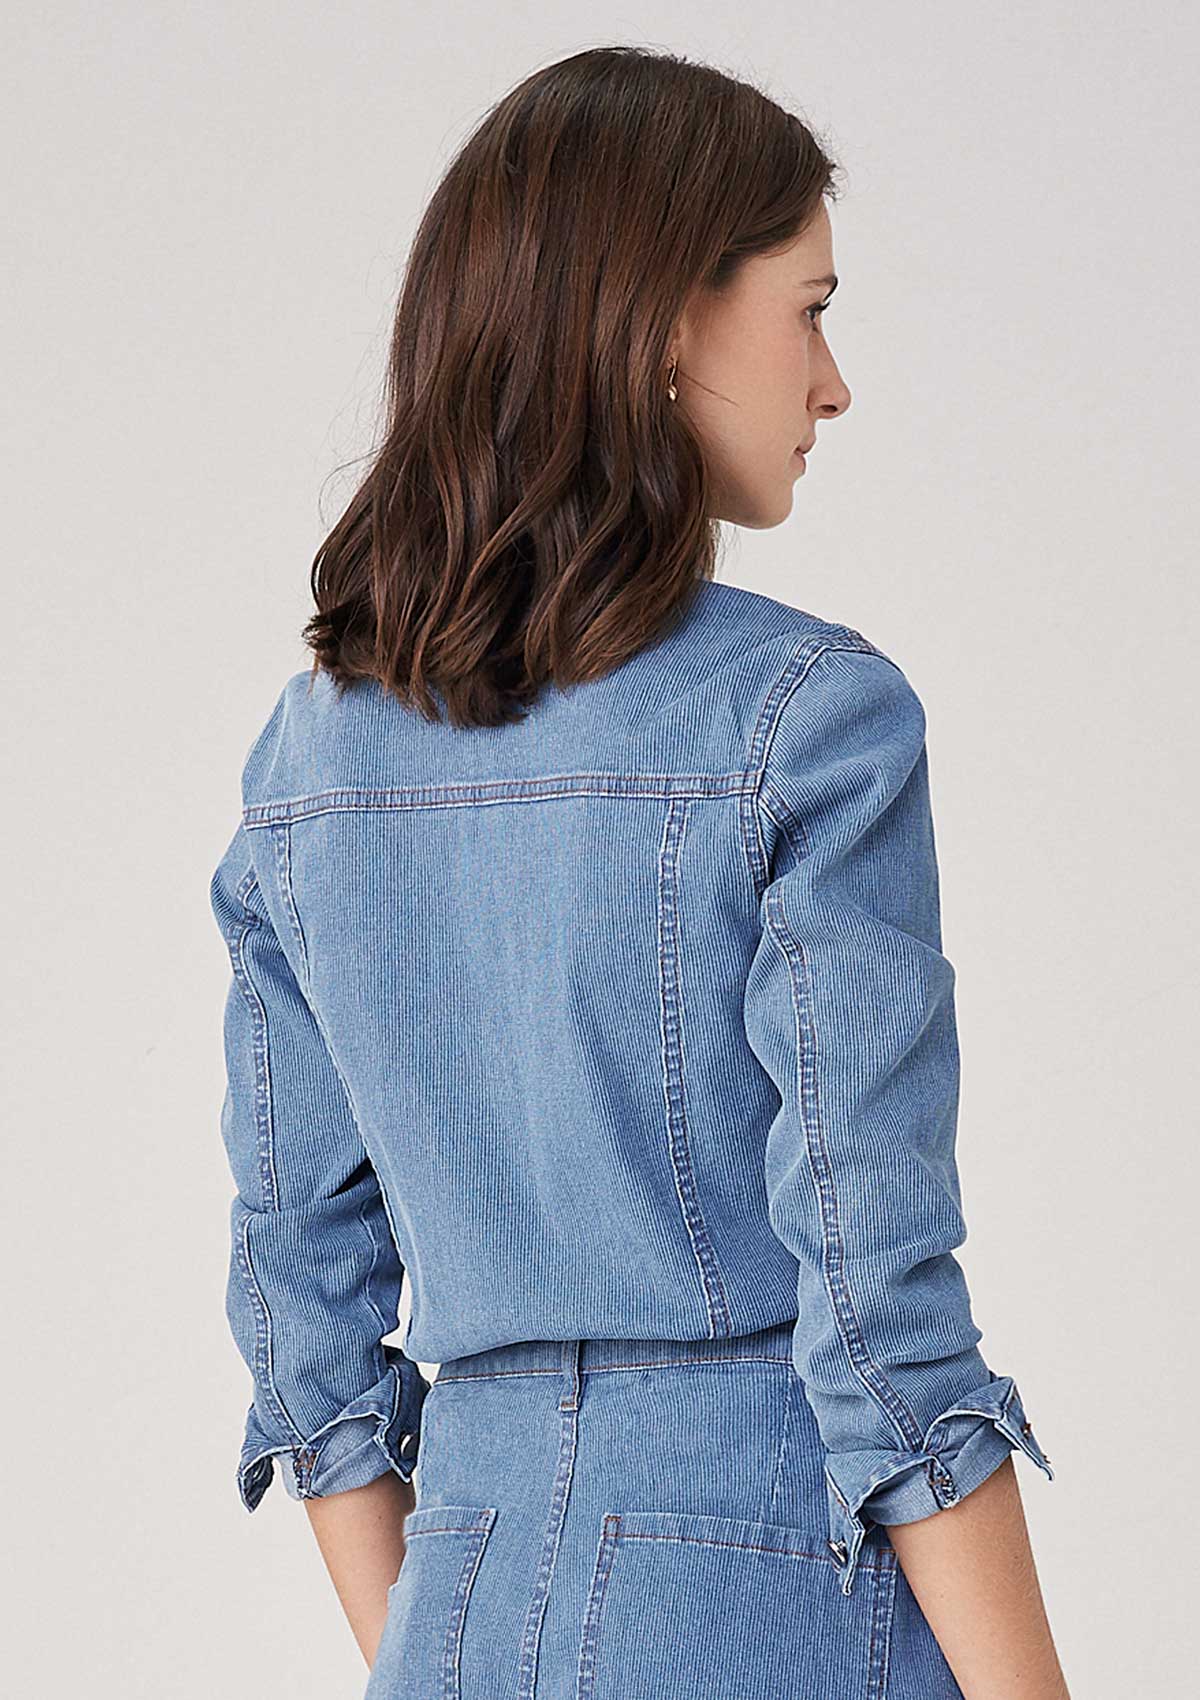 jaqueta jeans feminina dzarm